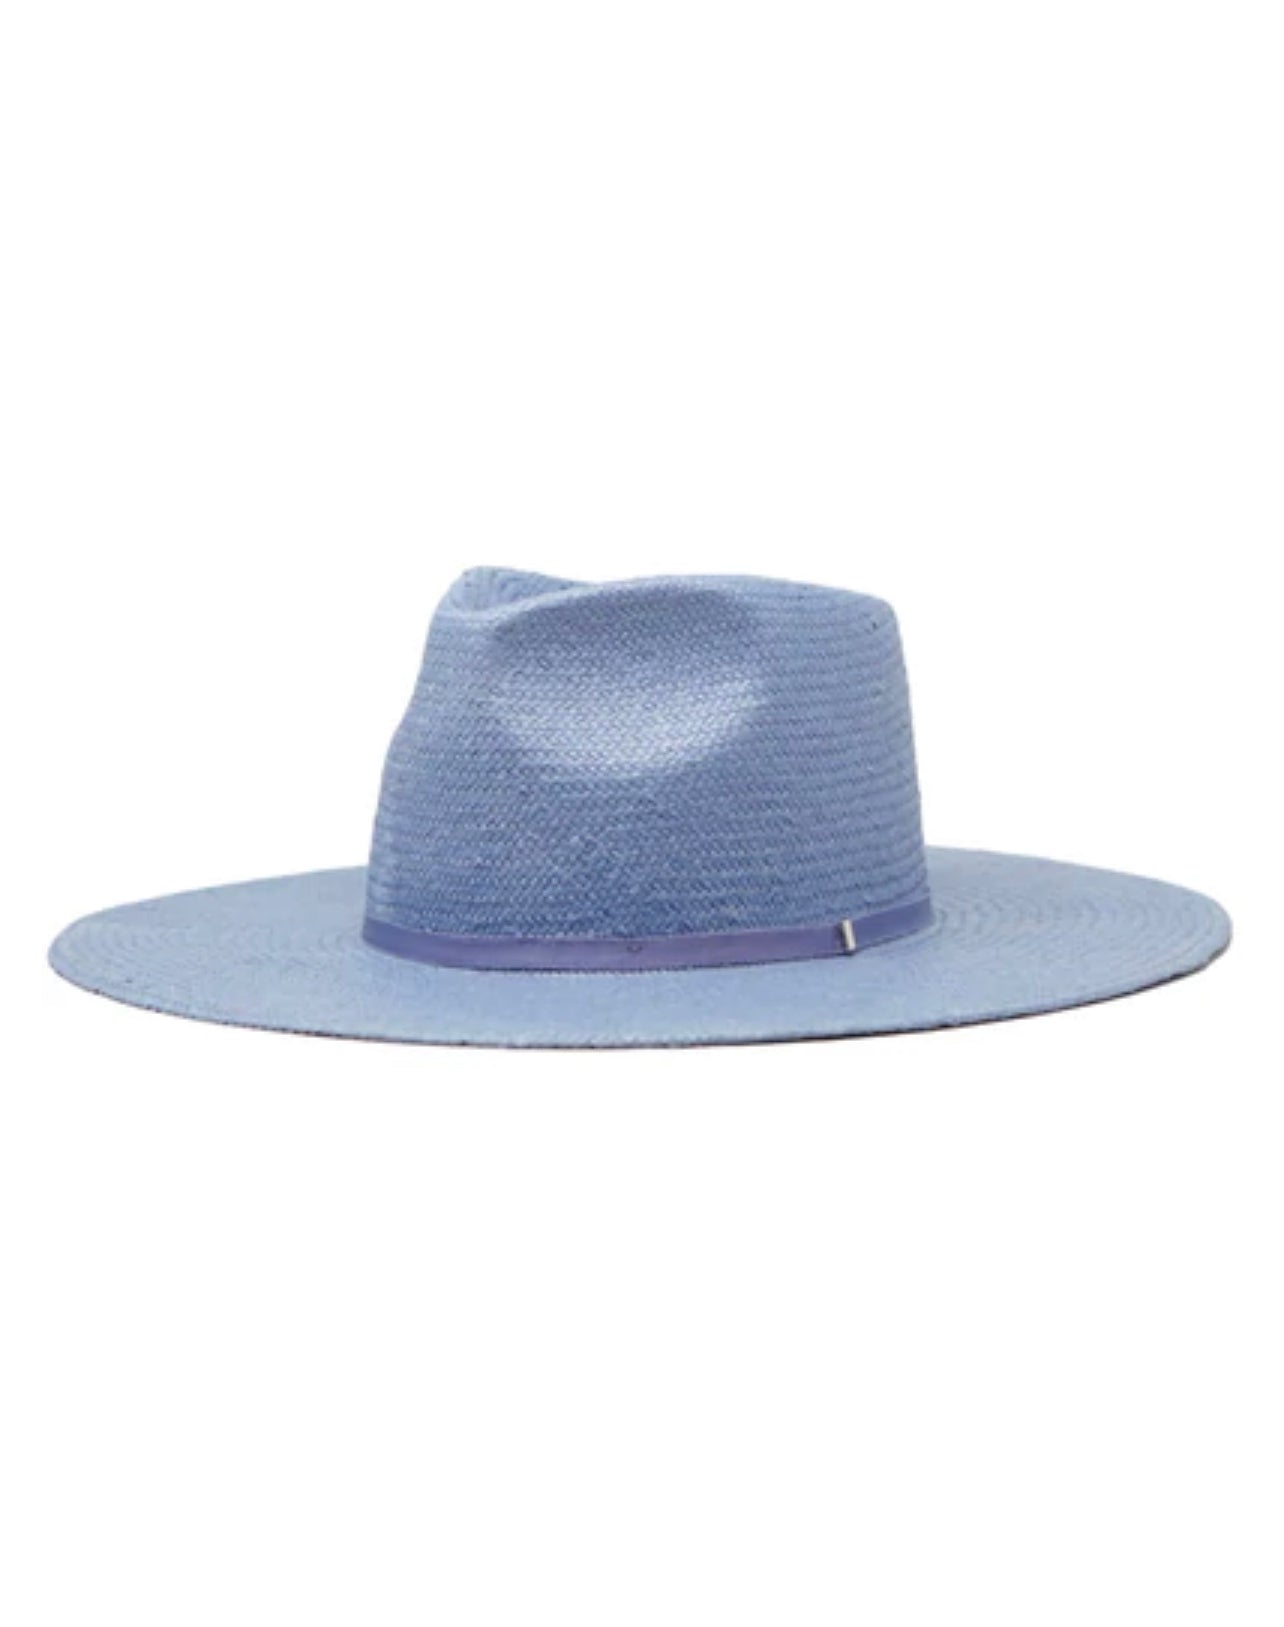 Light blue Straw Rancher hat